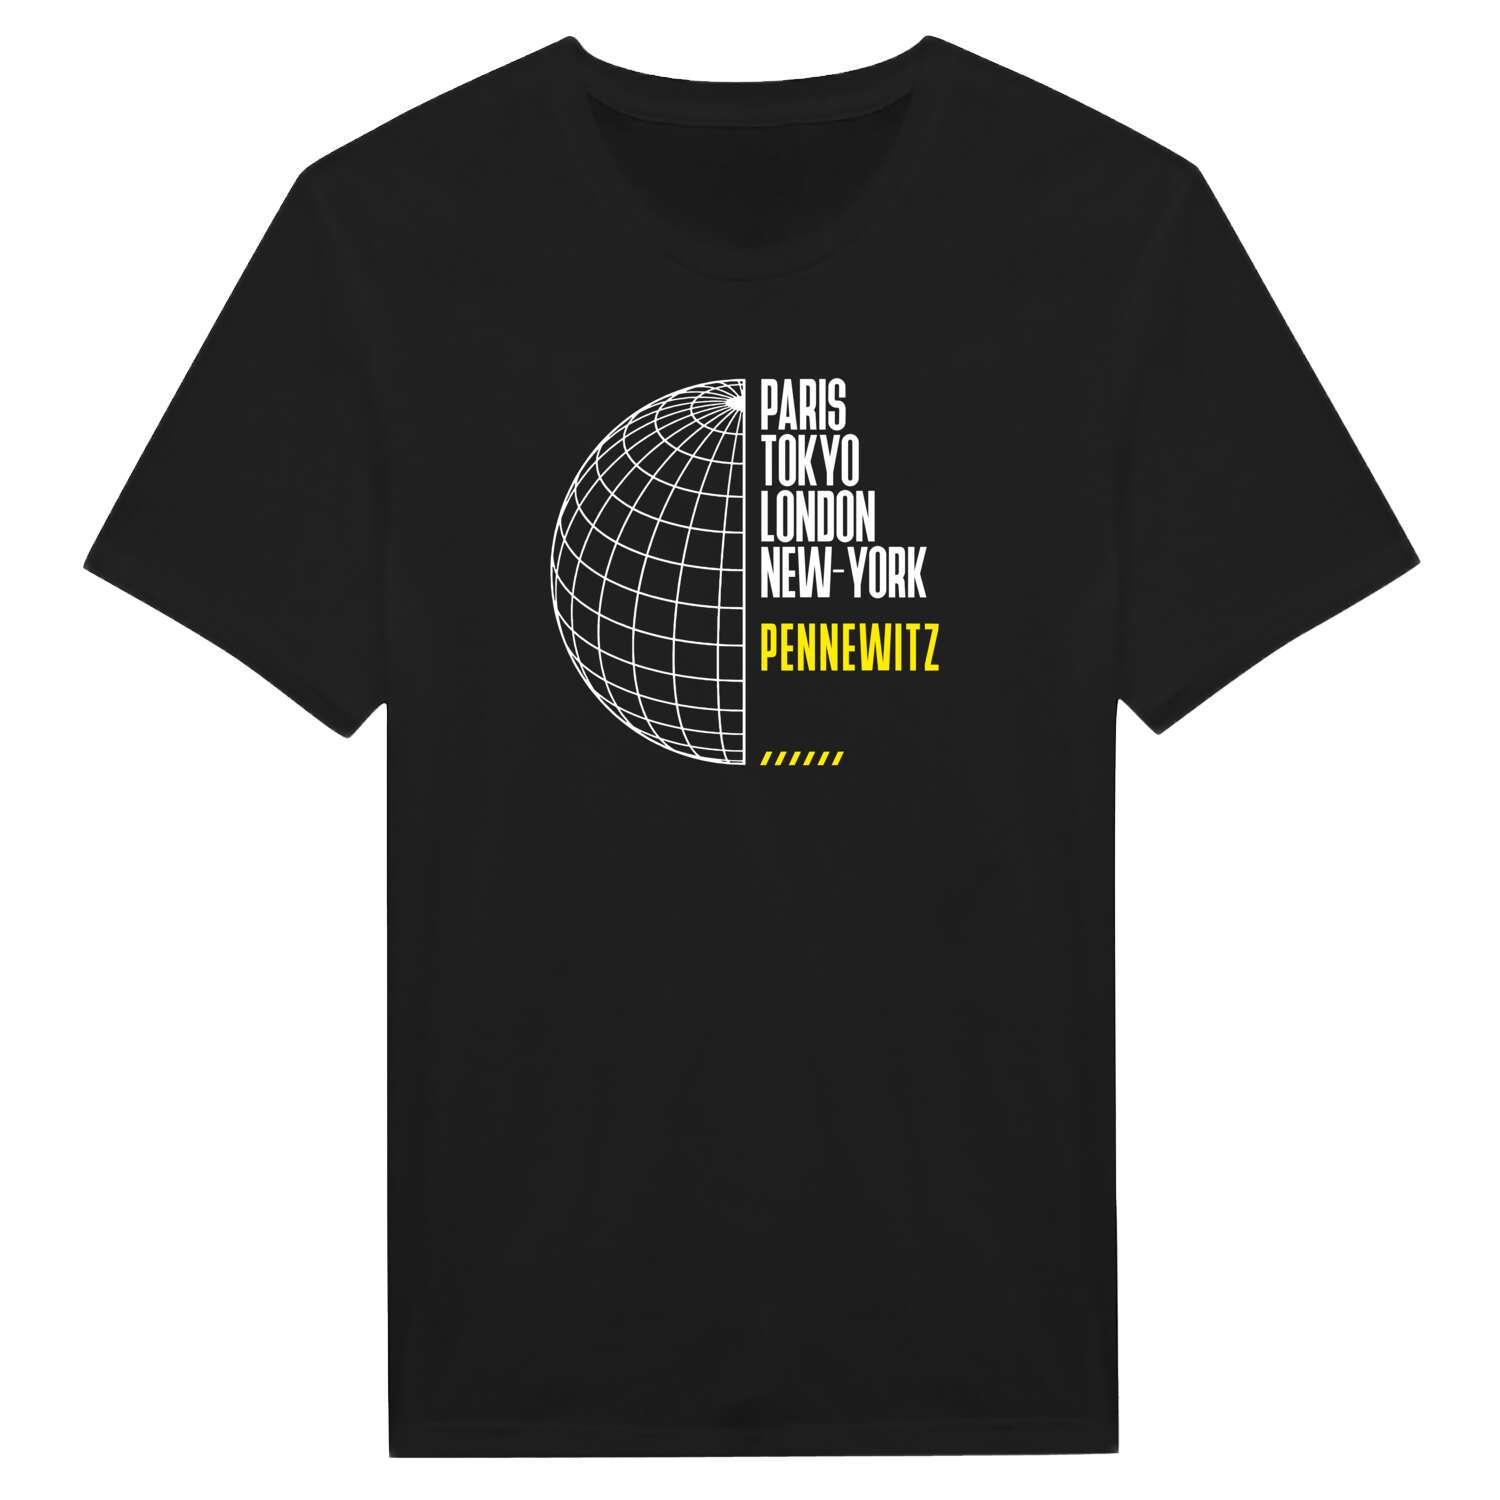 Pennewitz T-Shirt »Paris Tokyo London«